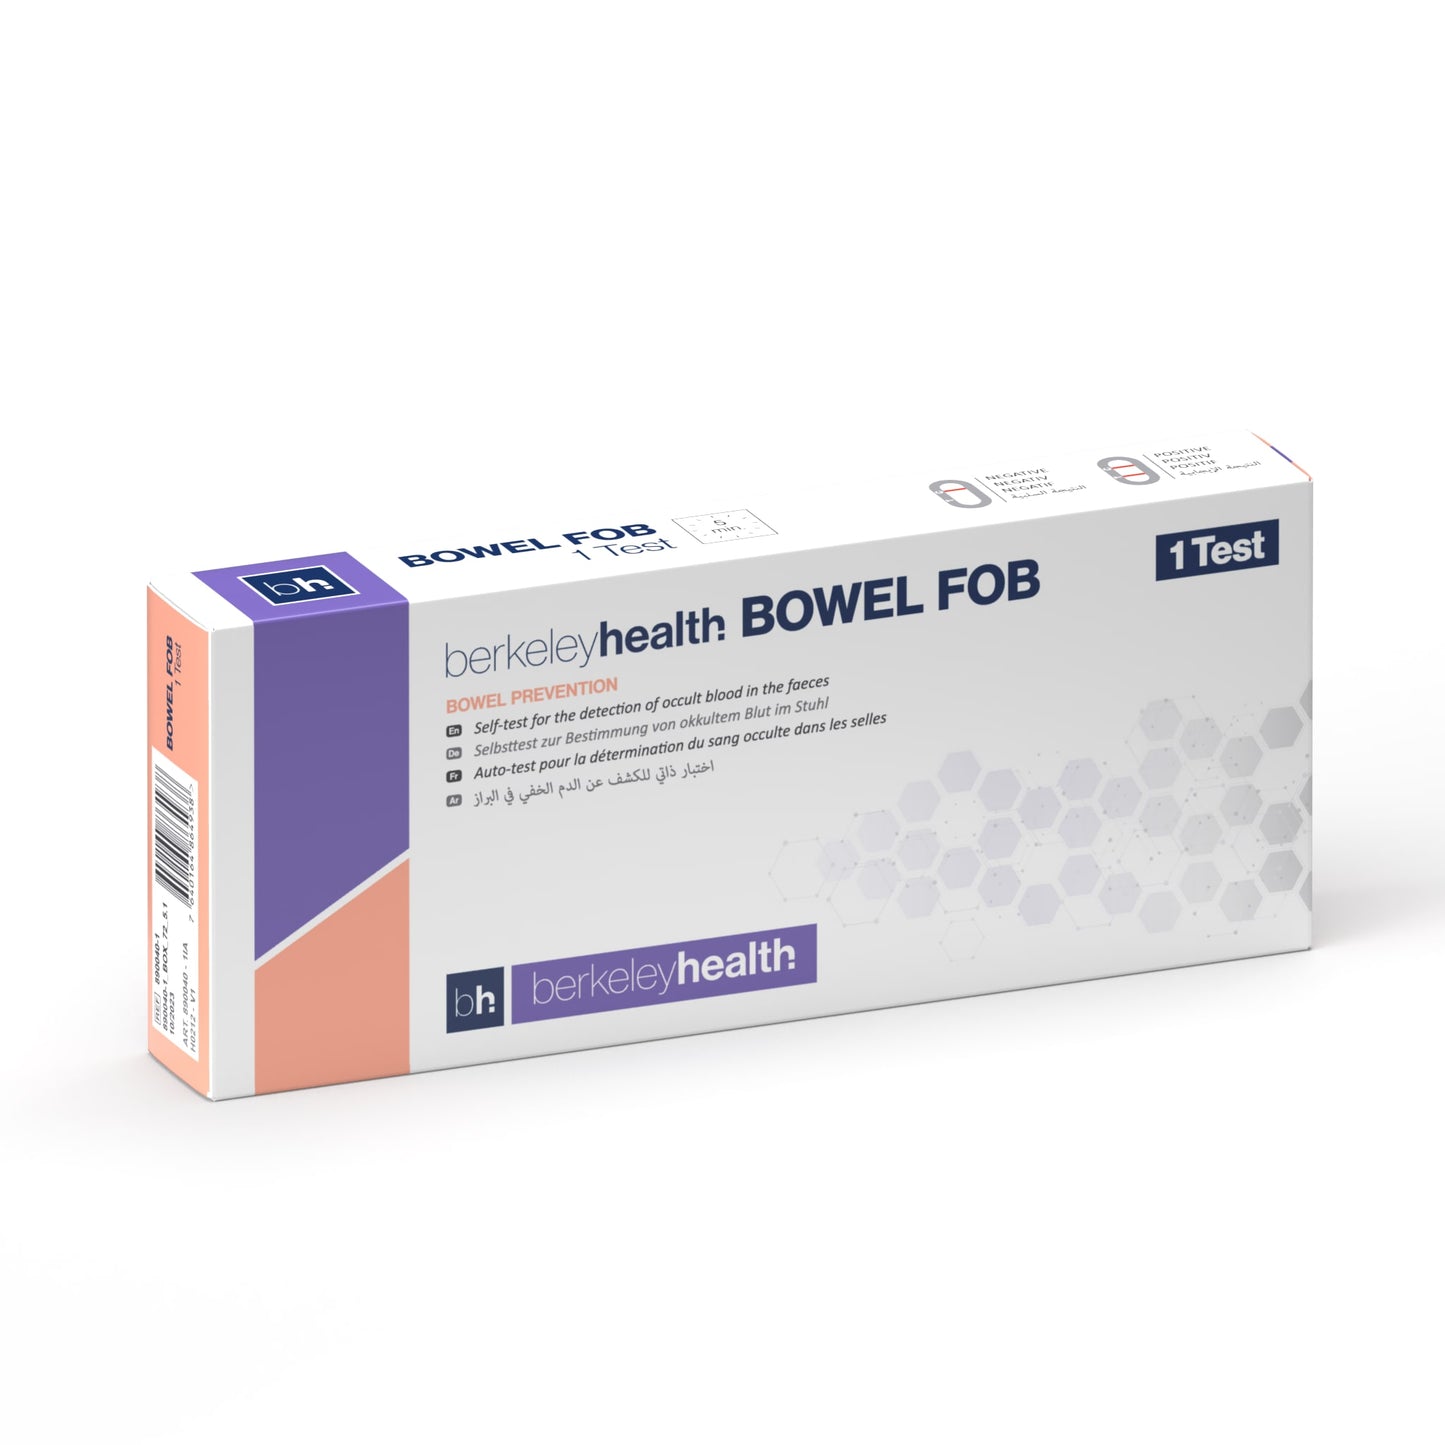 Berkeleyhealth Bowel FOB Rapid test (Self testing use)